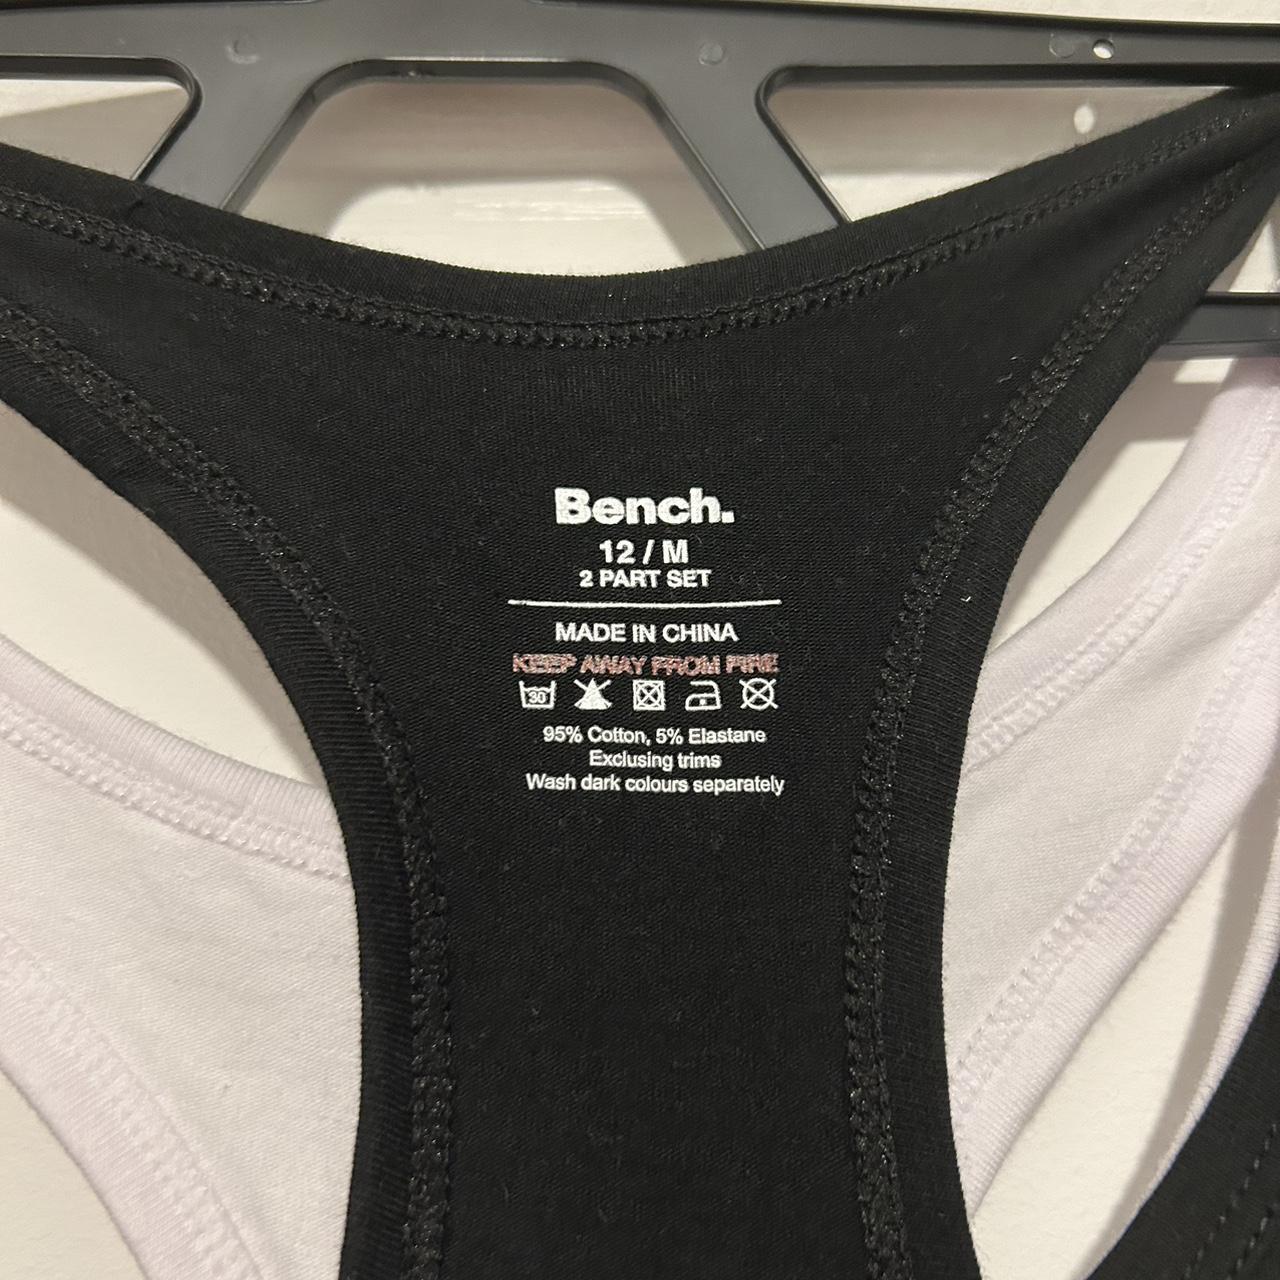 Bench sport bra size 12 medium Brand new without - Depop